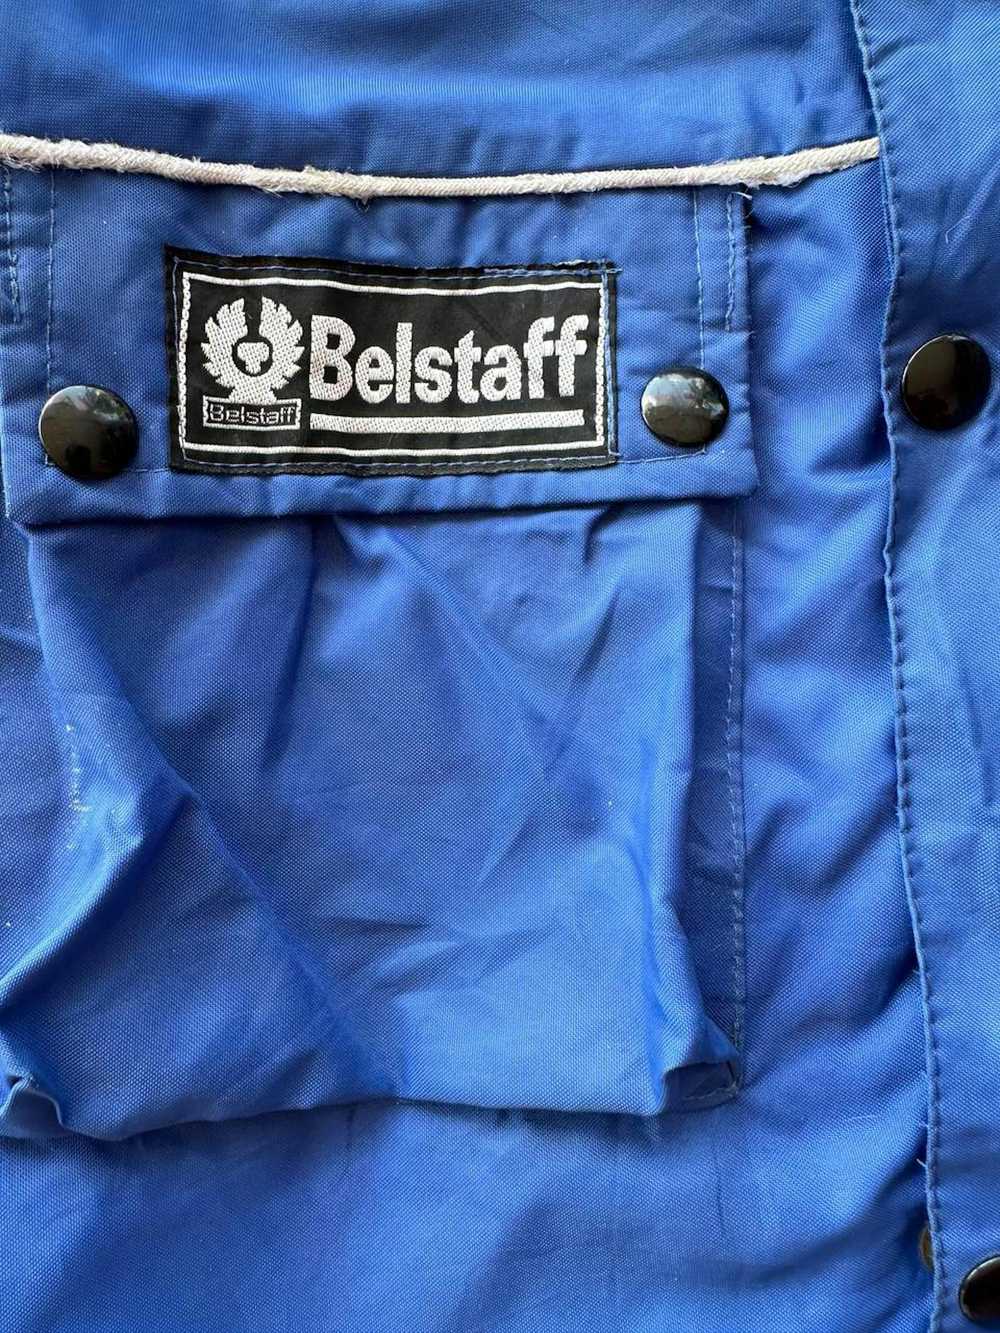 Belstaff Belstaff Trial Master 500 Biker Jacket - image 11